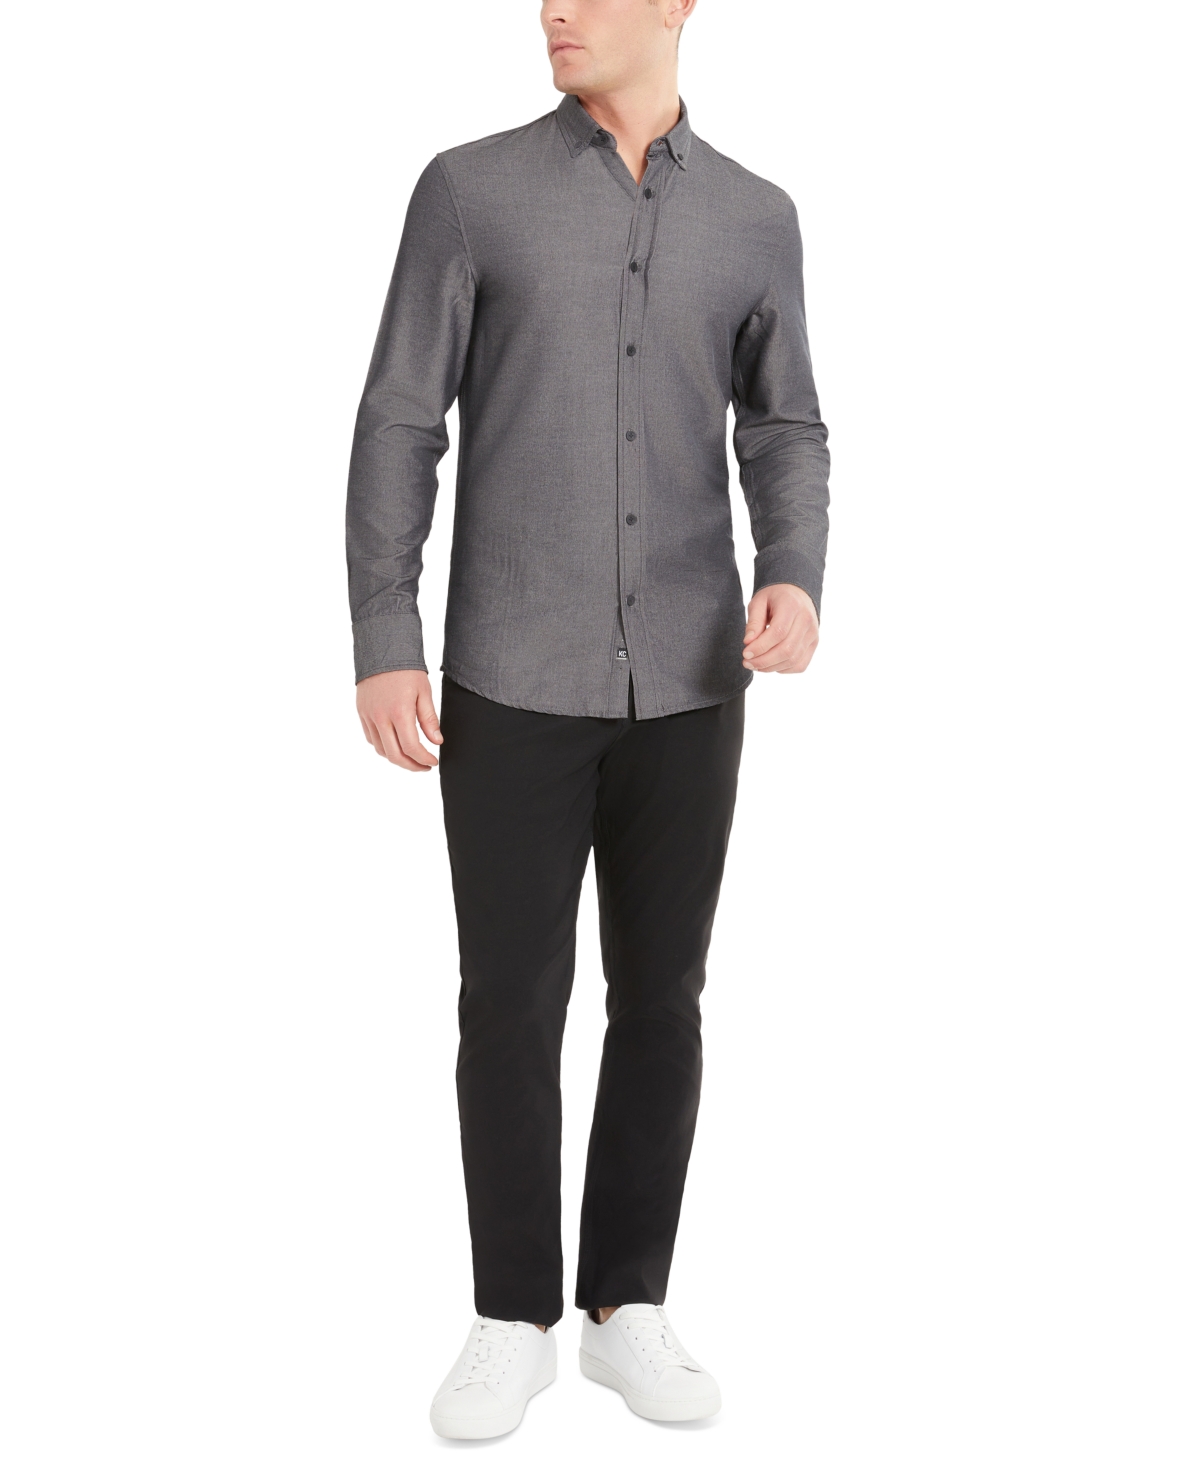 Men's 4-Way Stretch Solid Button-Down Shirt - Black